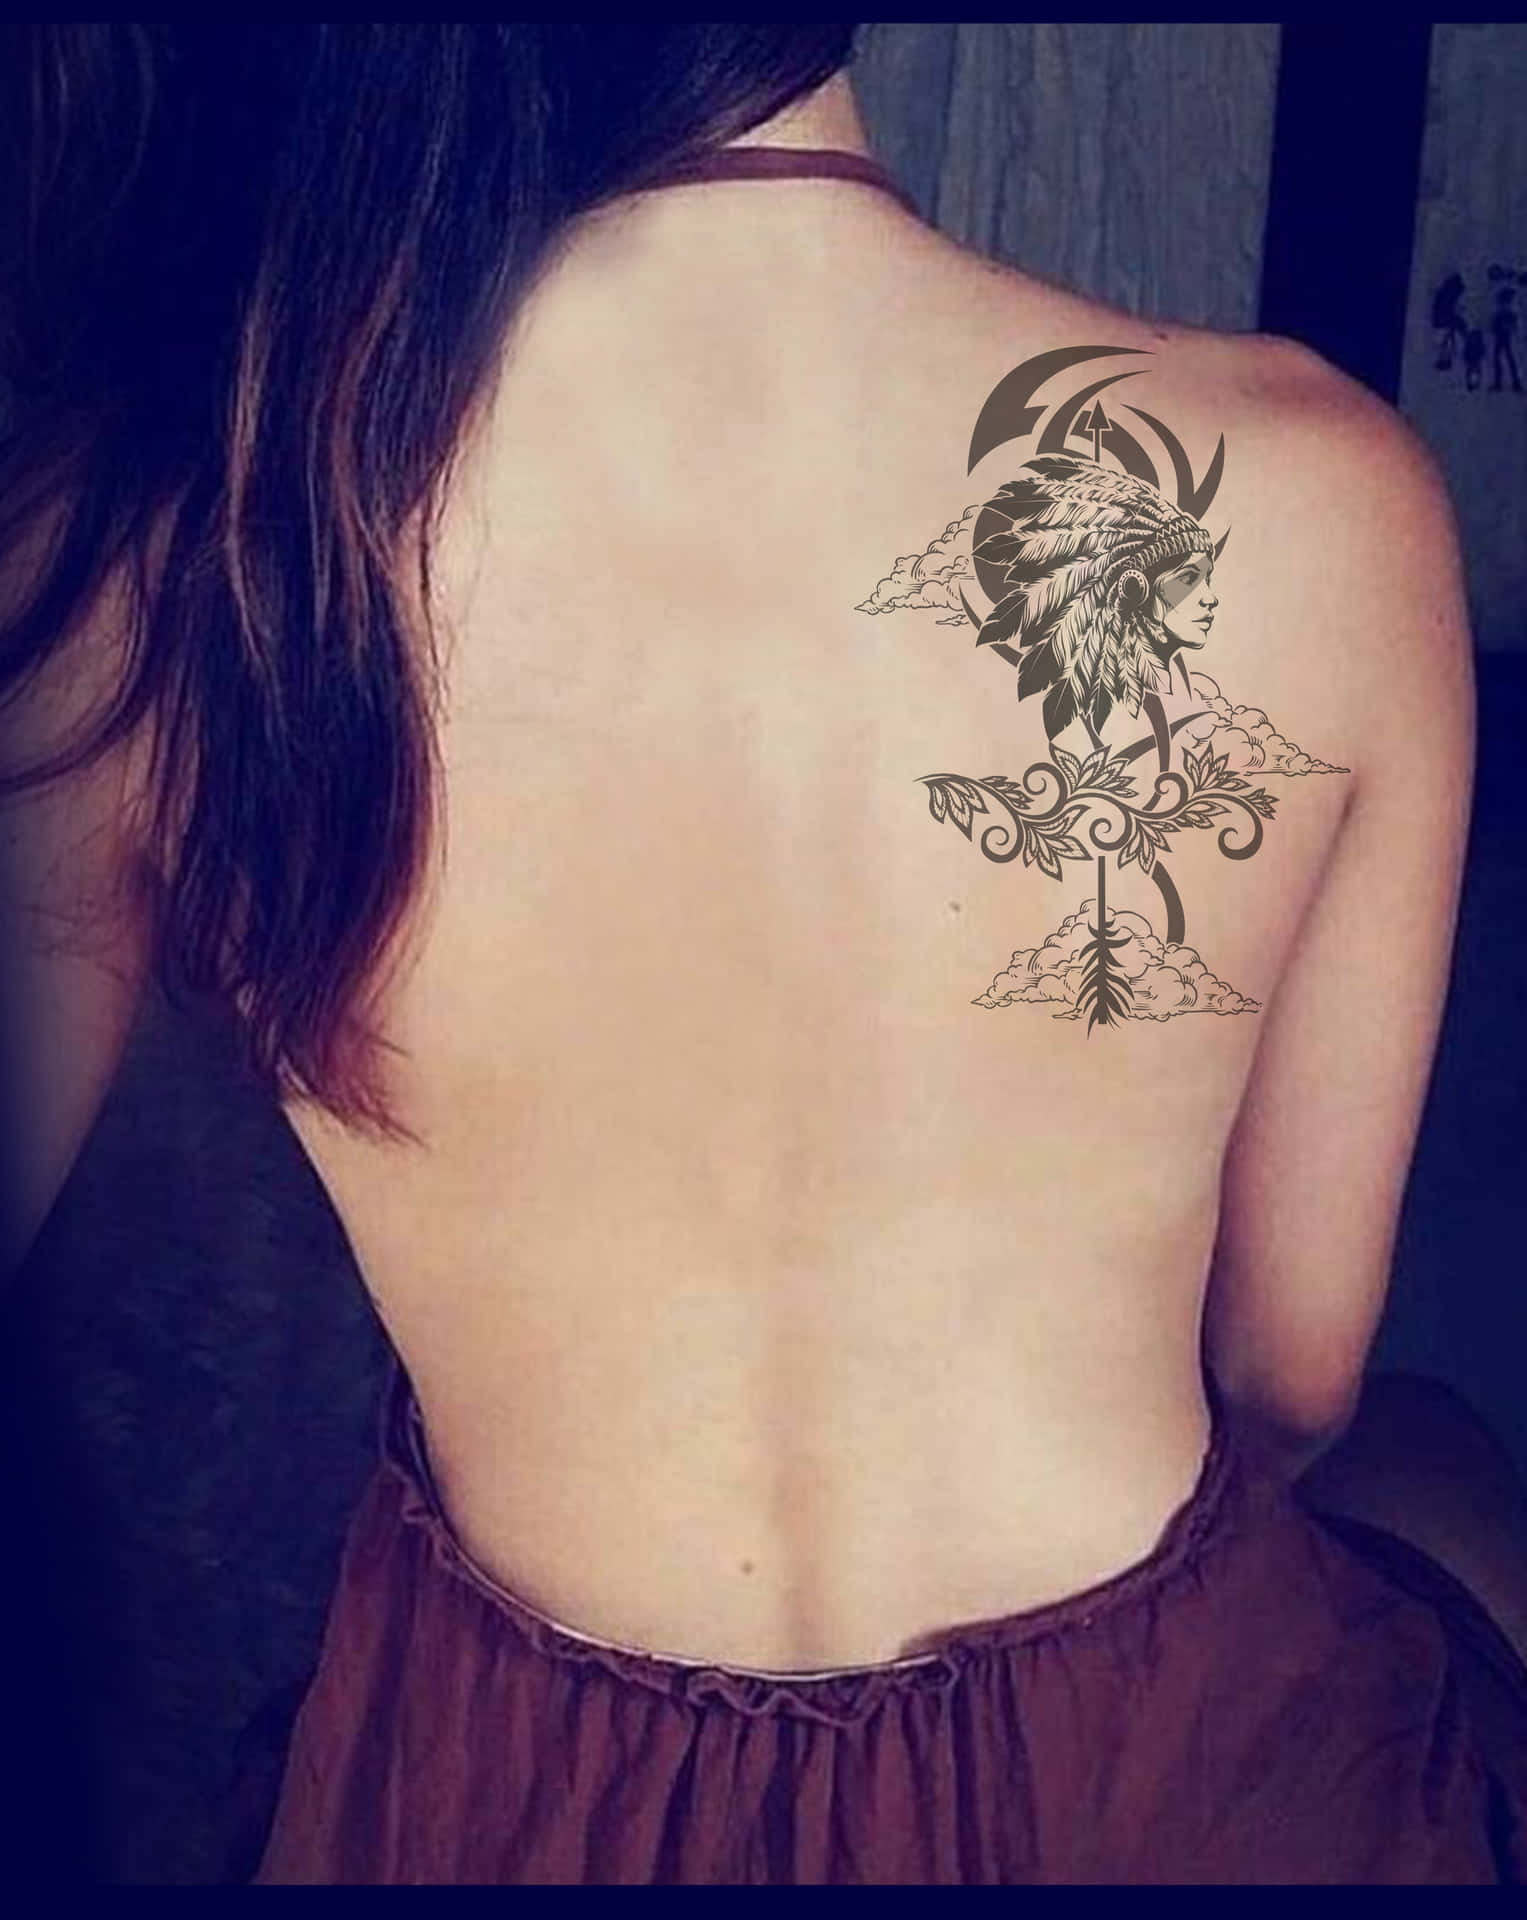 "Beautiful tattooed woman expressing her individuality"